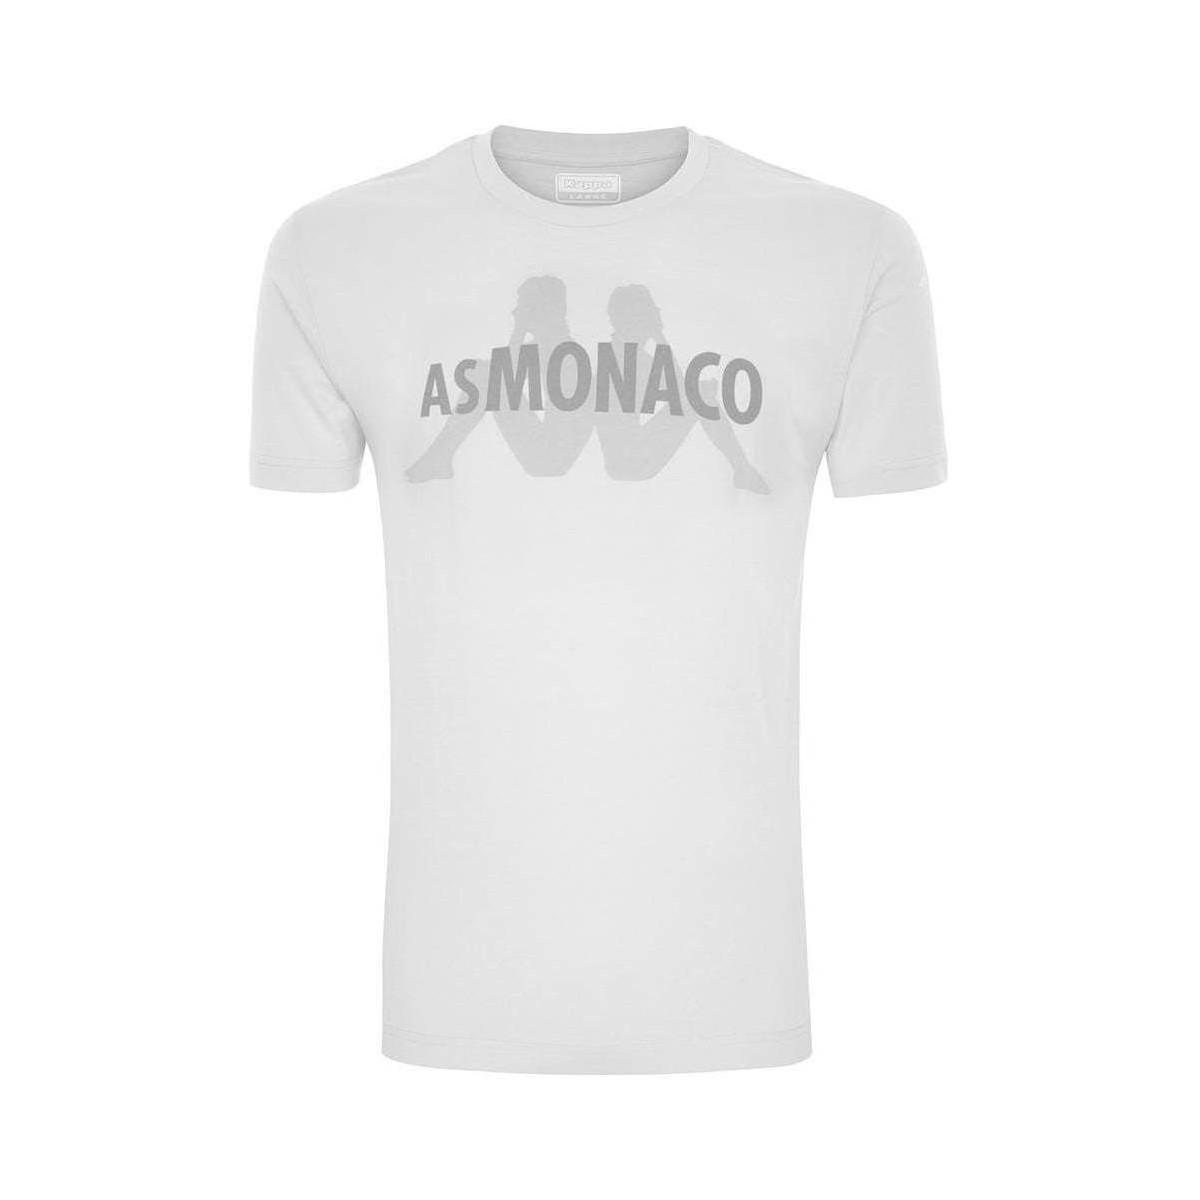 Vêtements Garçon T-shirts manches courtes Kappa T-shirt Avlei As Monaco Blanc